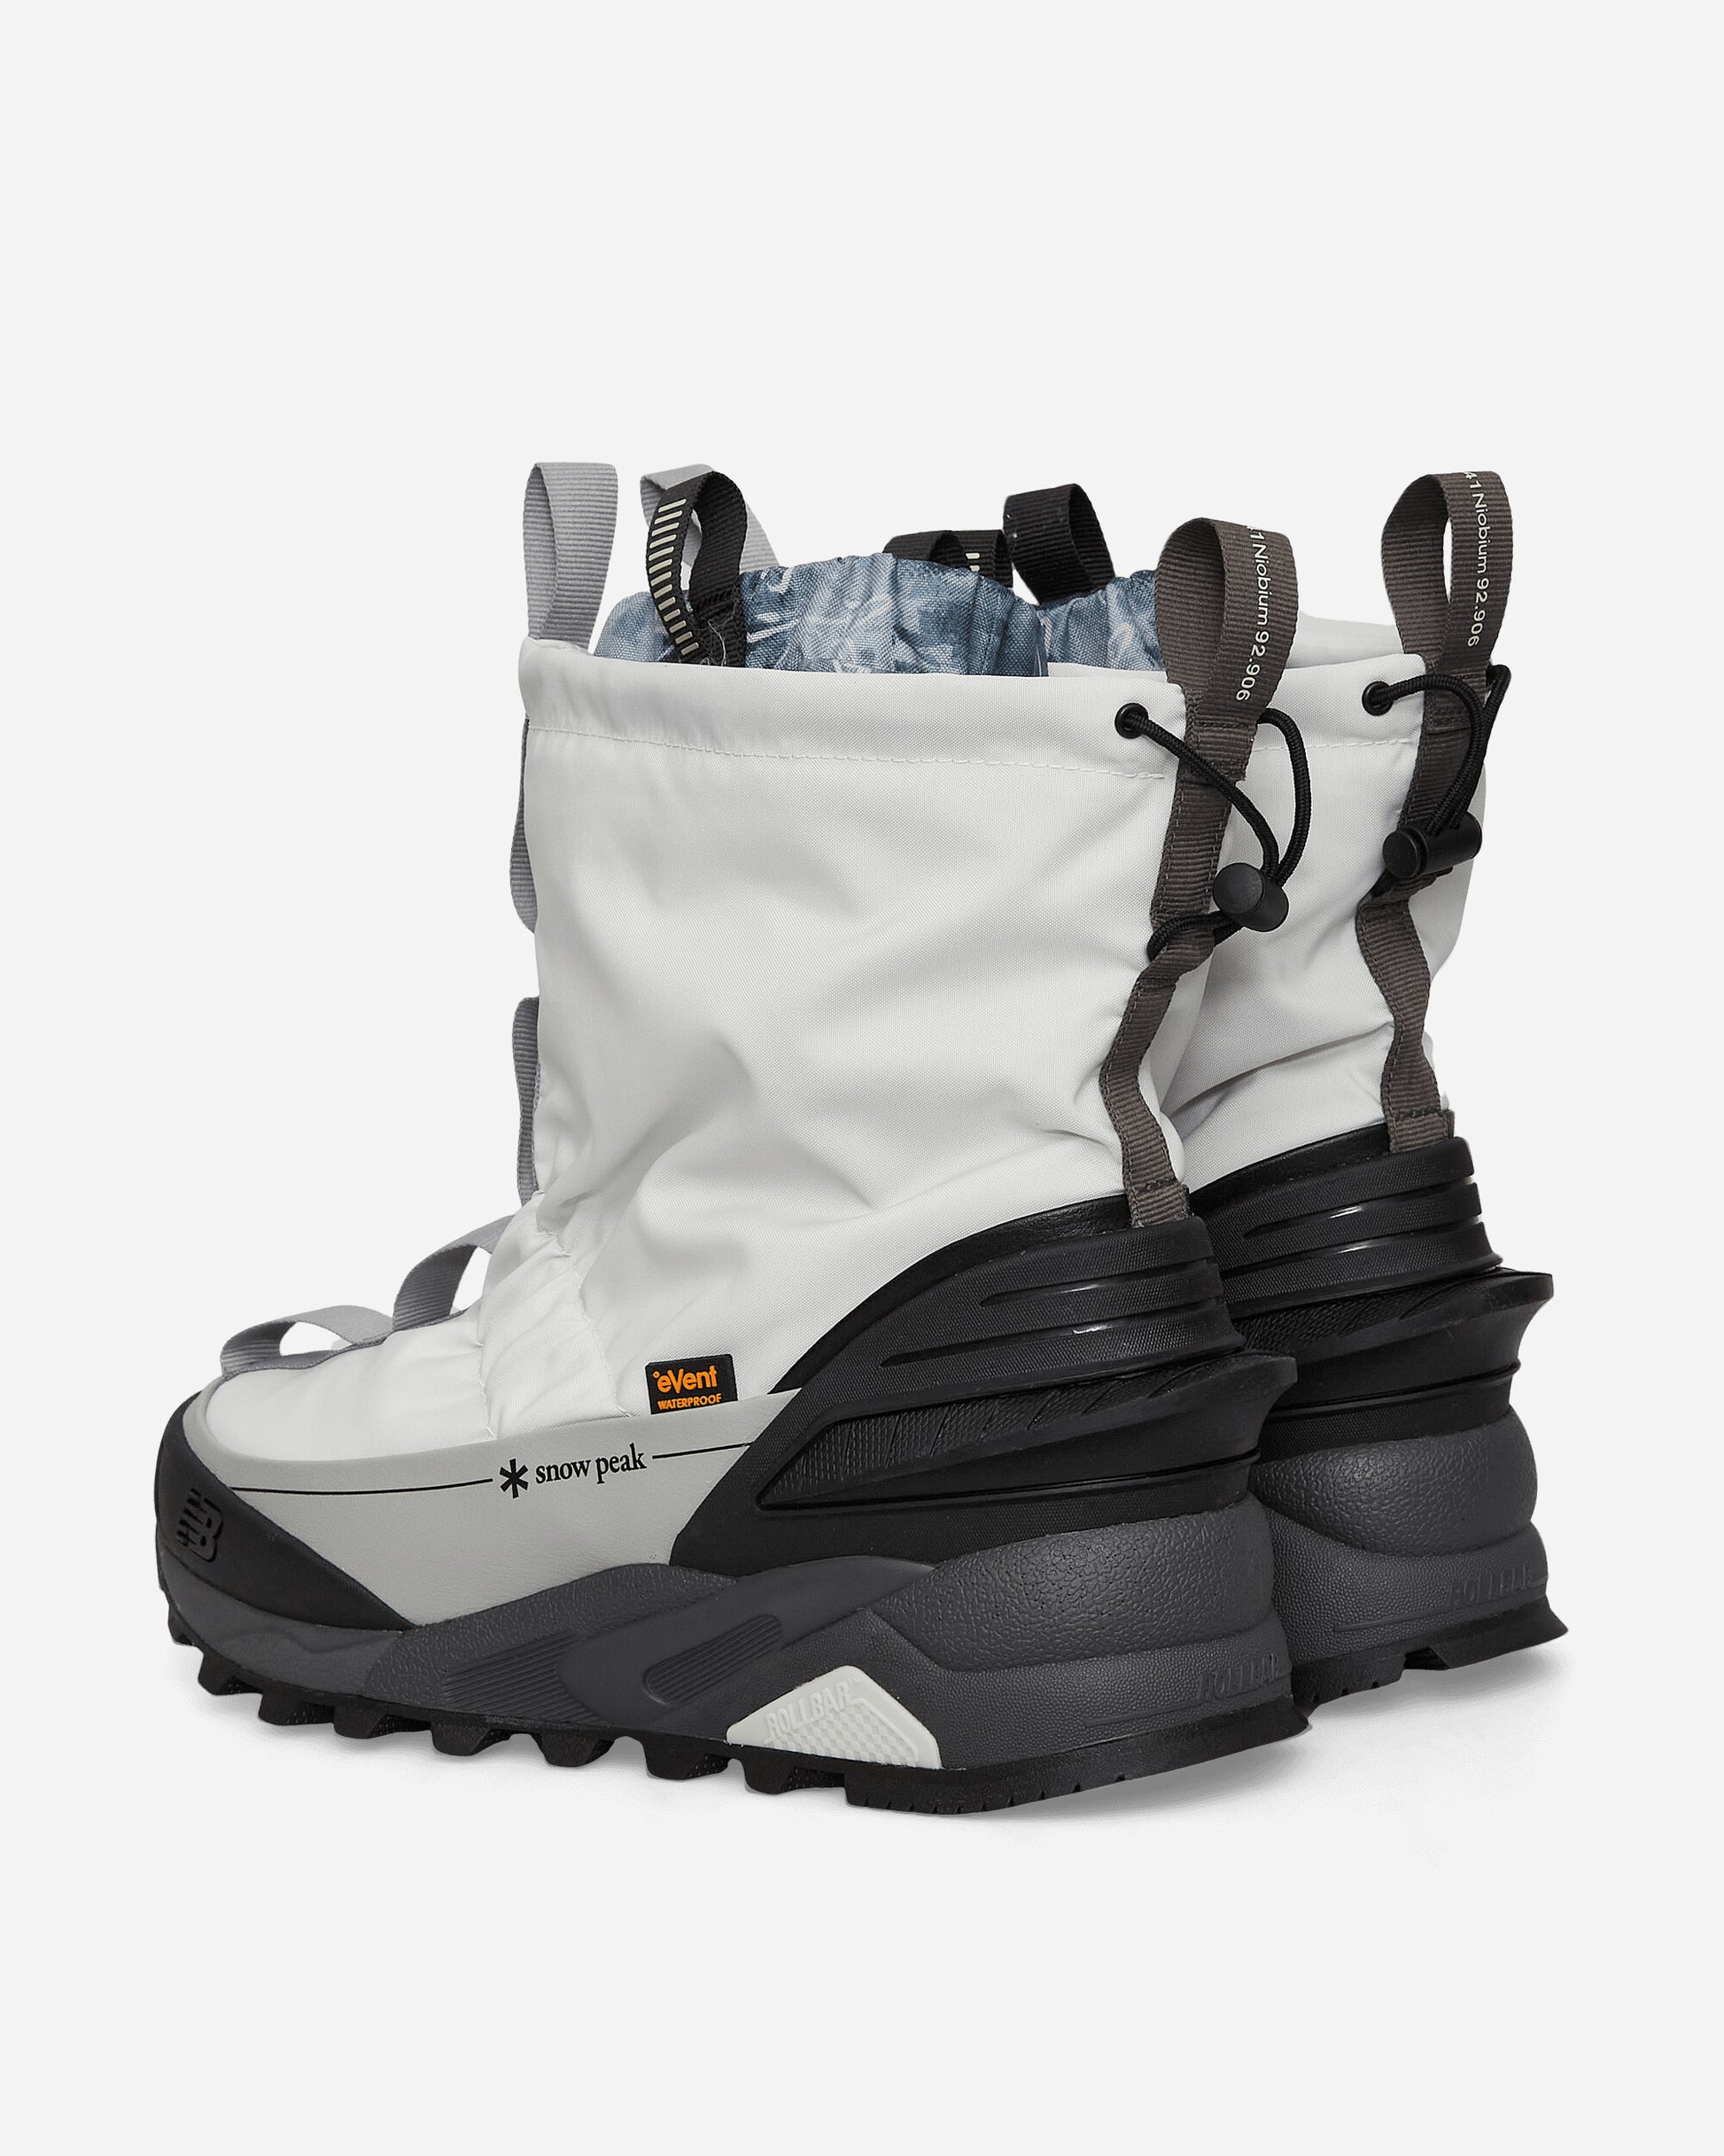 New Balance MSNB3SP Snow Peak Niobium Grey Boots Mid Boot MSNB3SP